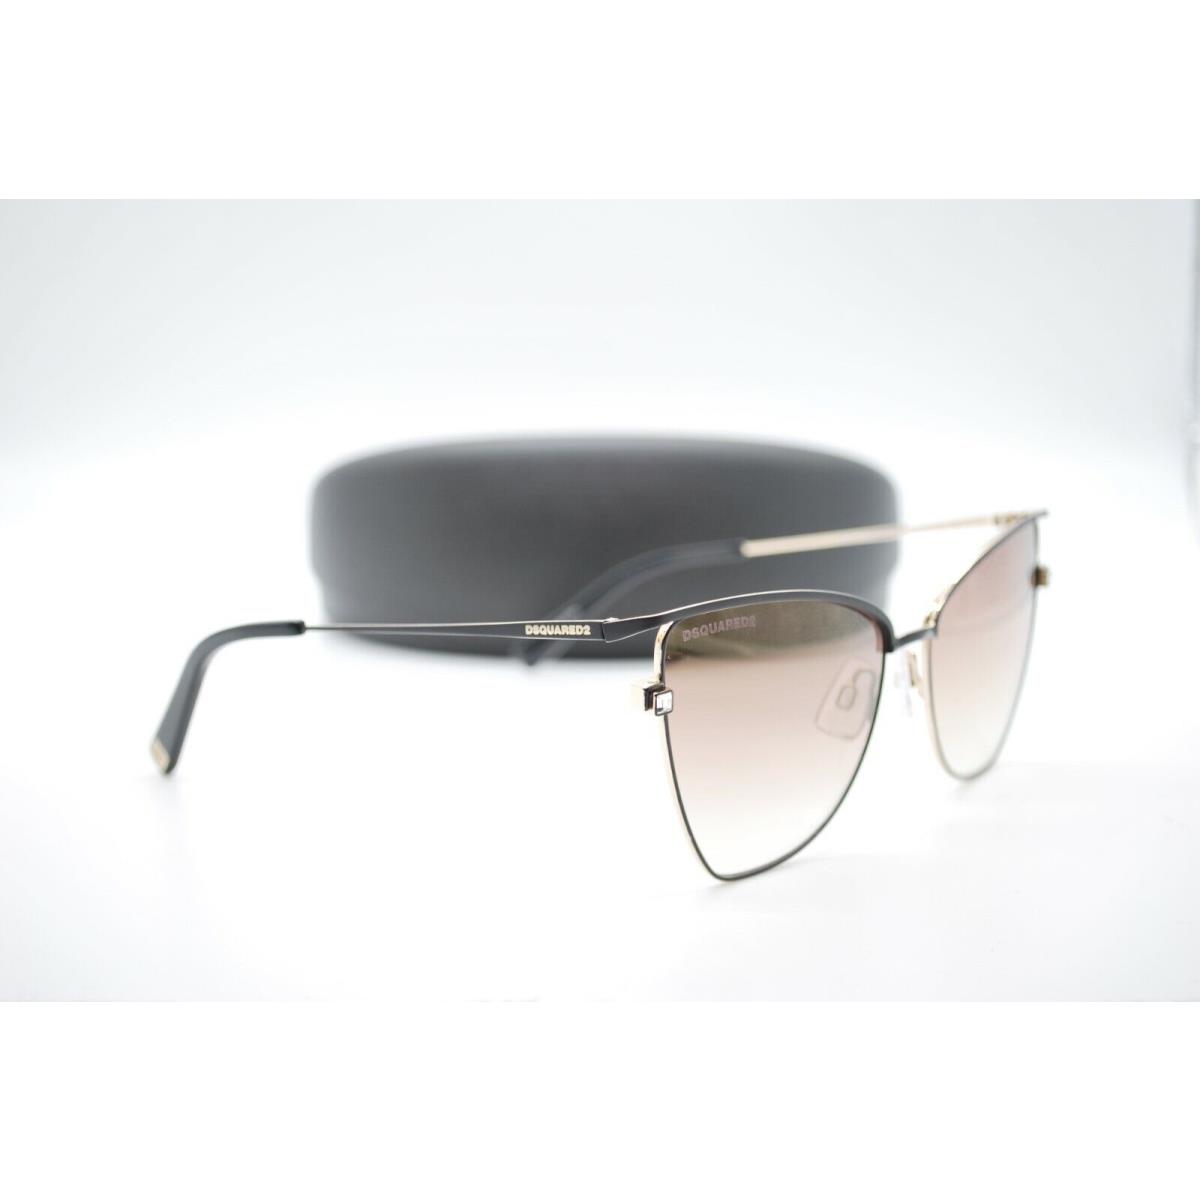 DSQUARED2 DQ 0301 02G Black Brown Gradient Frame Sunglasses 57-16